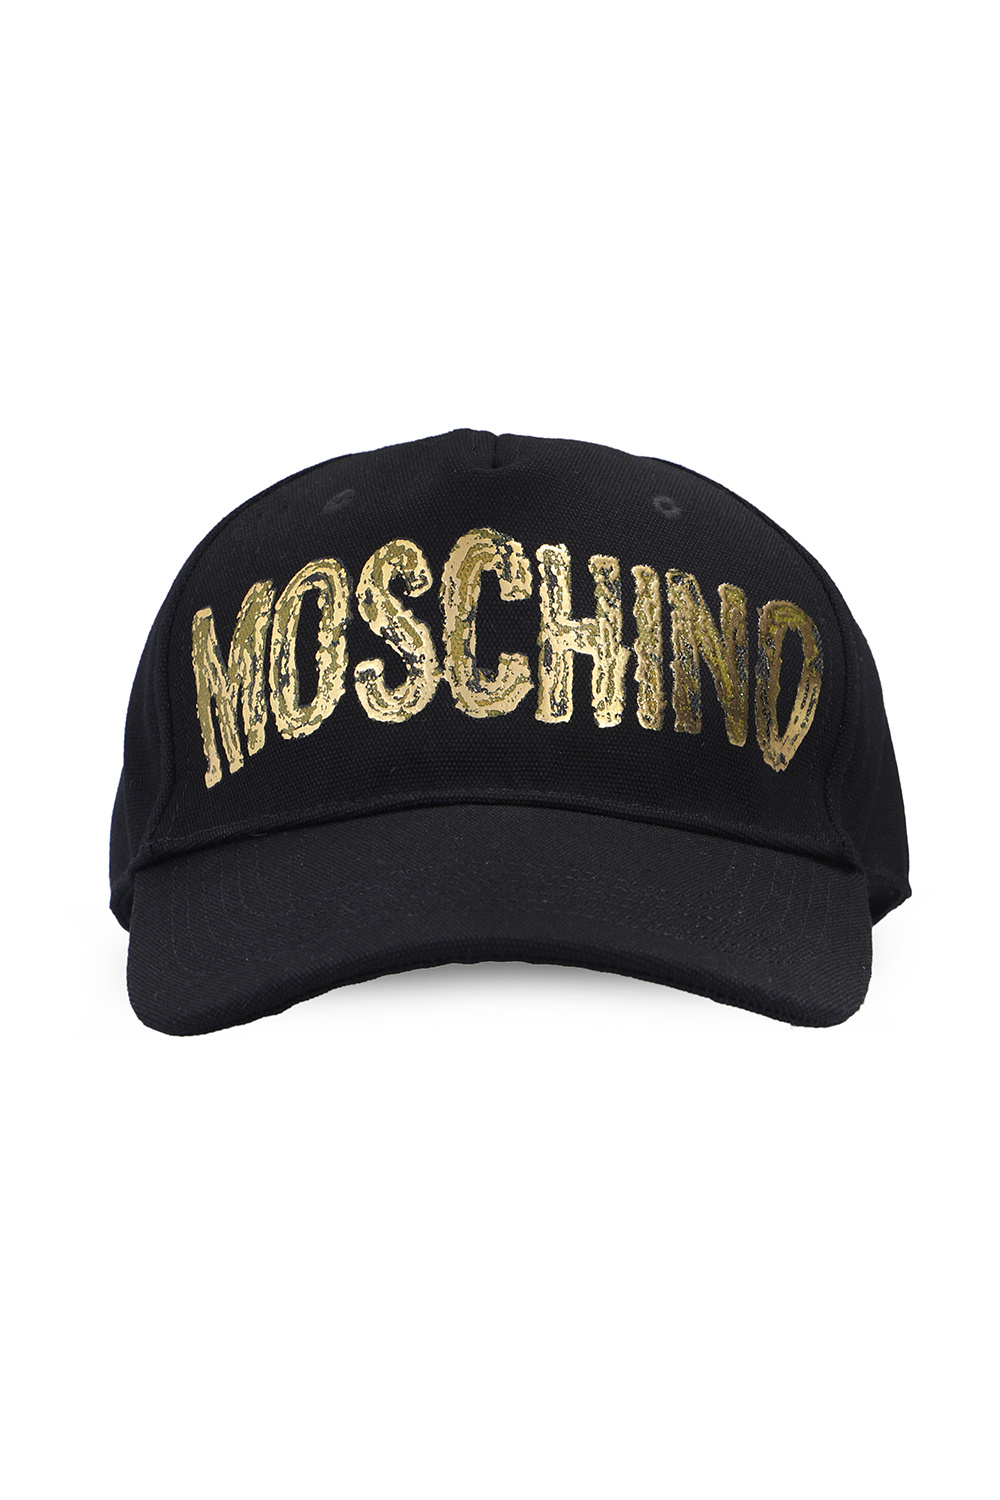 Moschino Baseball cap with logo